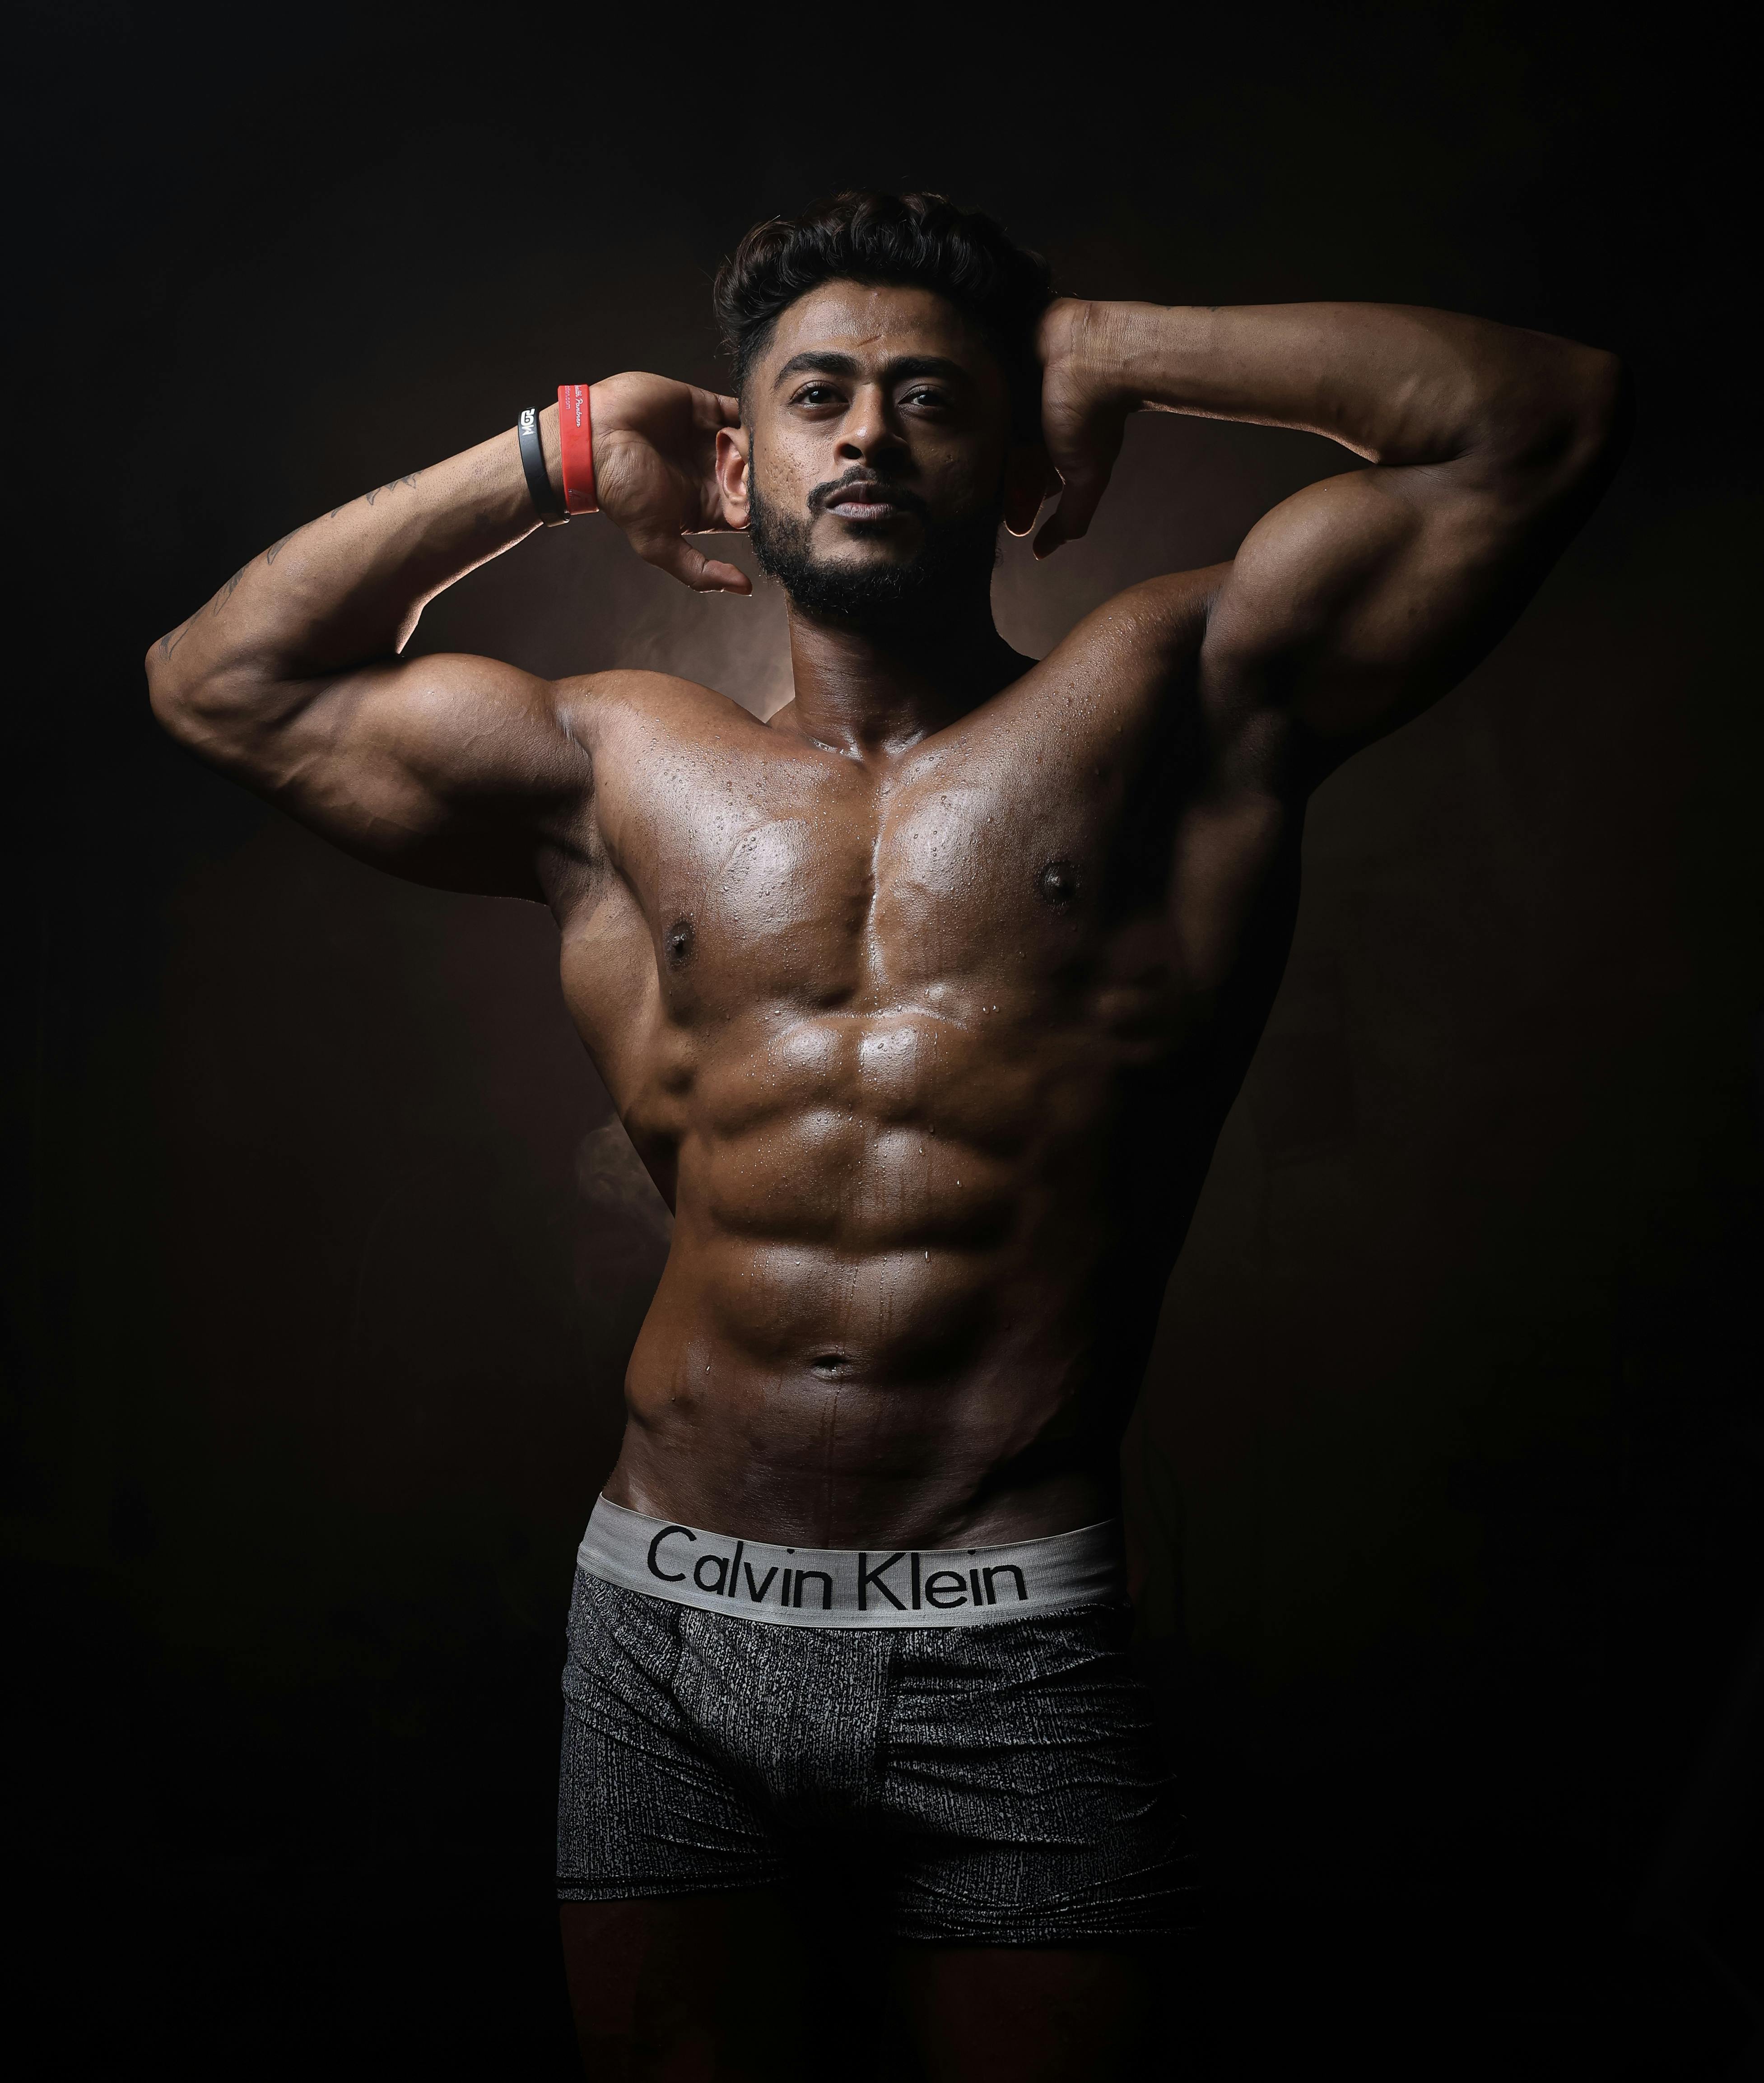 Muscular Model in Calvin Klein Underwear · Free Stock Photo